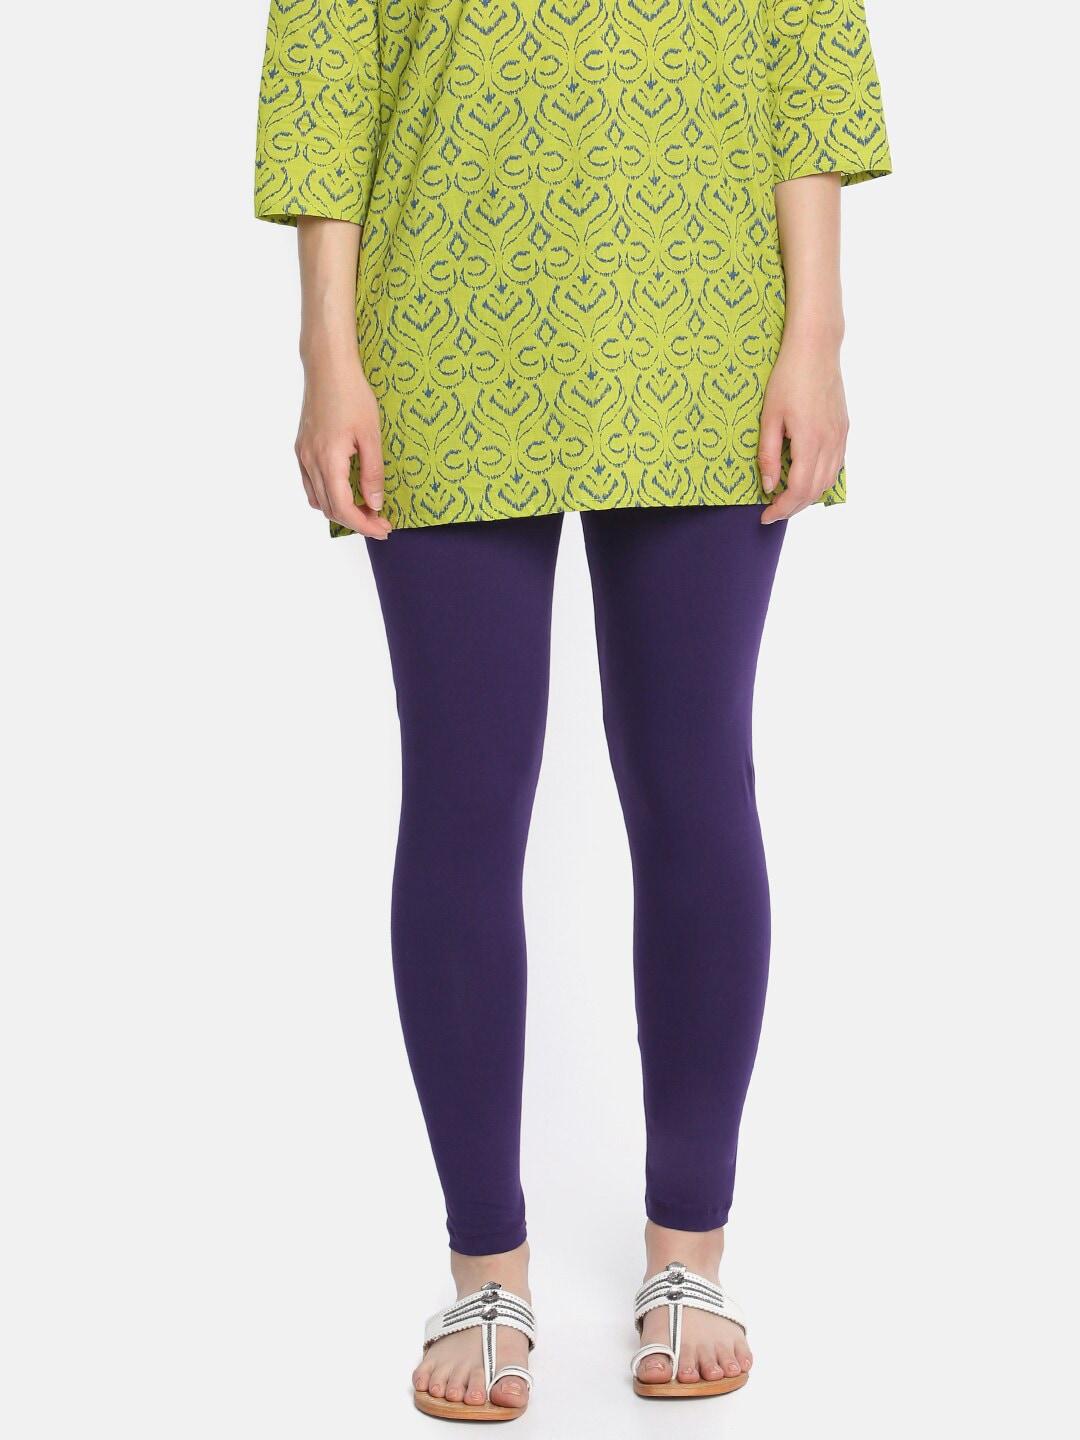 dollar missy woman purple cotton slim fit ankle length leggings